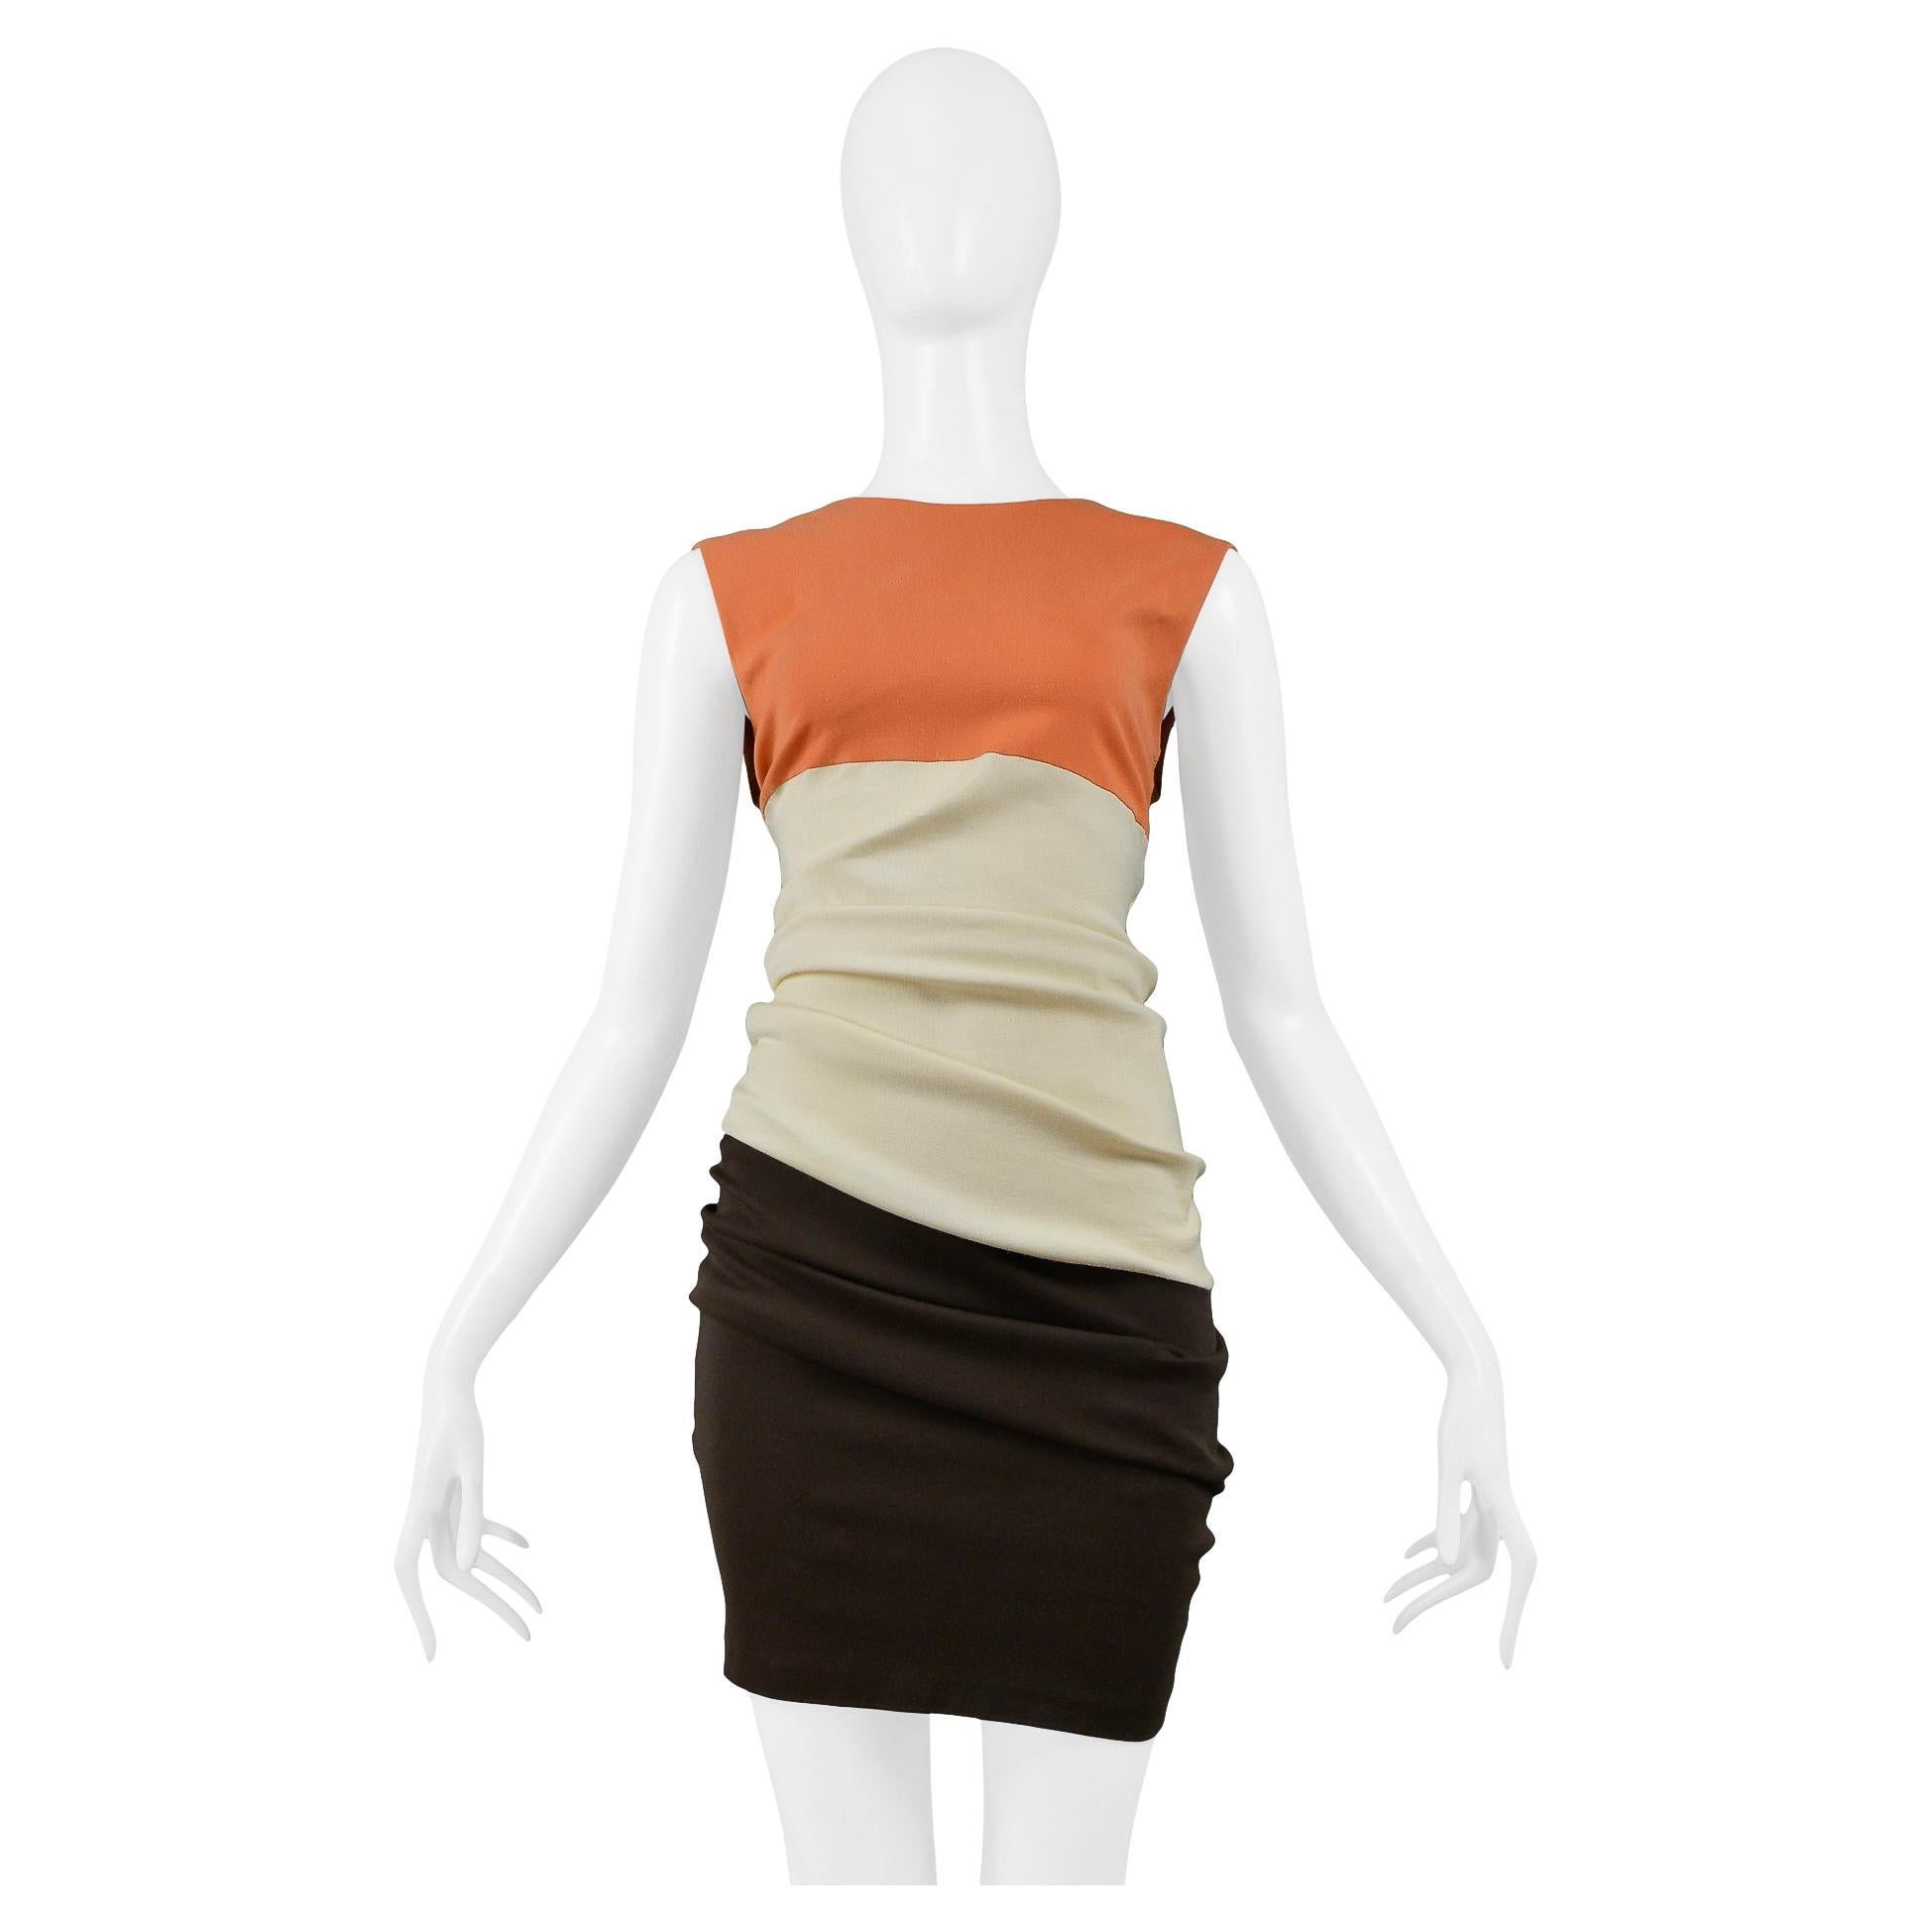 Helmut Lang Coral Ivory & Brown Color Block Knit Dress 1990 For Sale